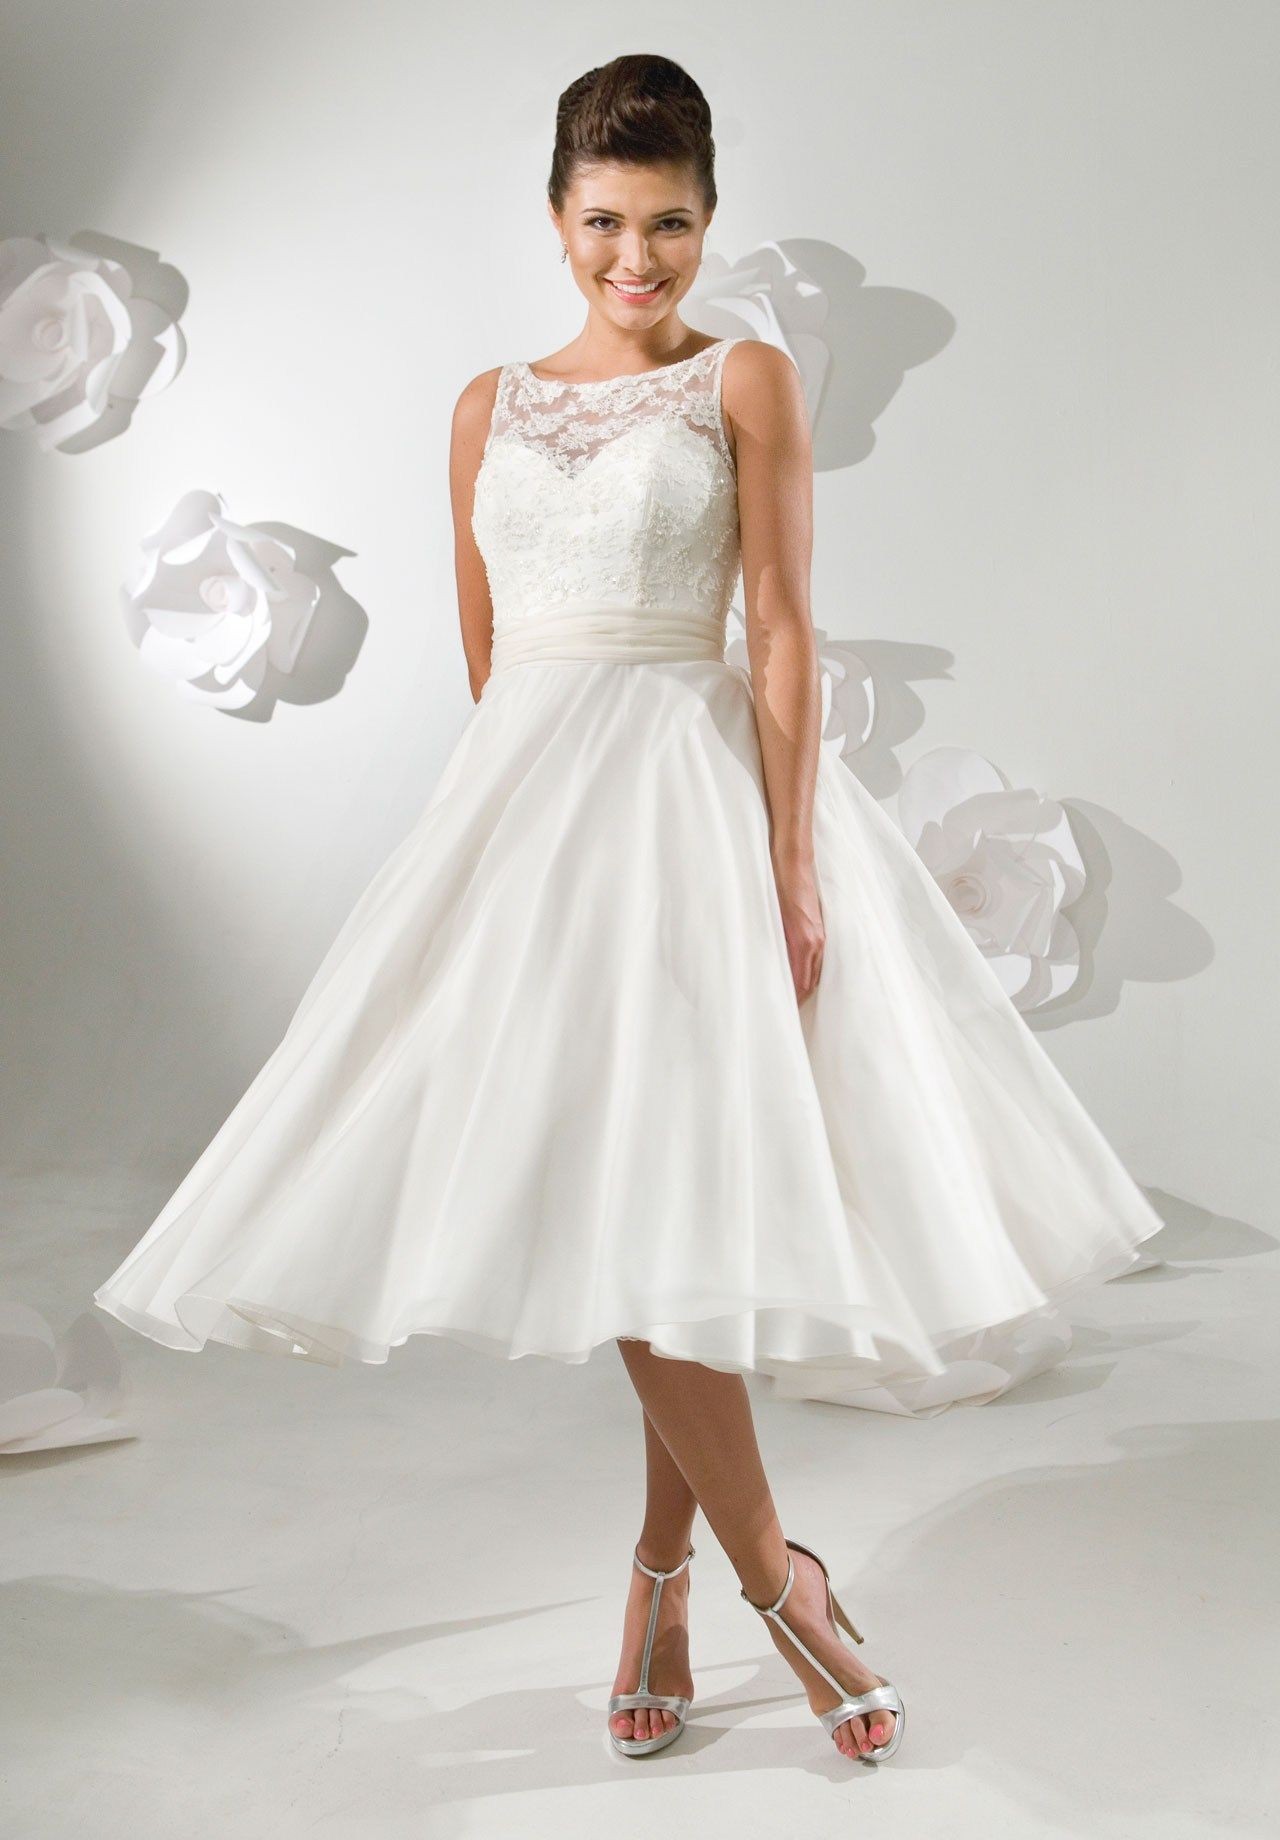 Tea length wedding dress with lace bodice